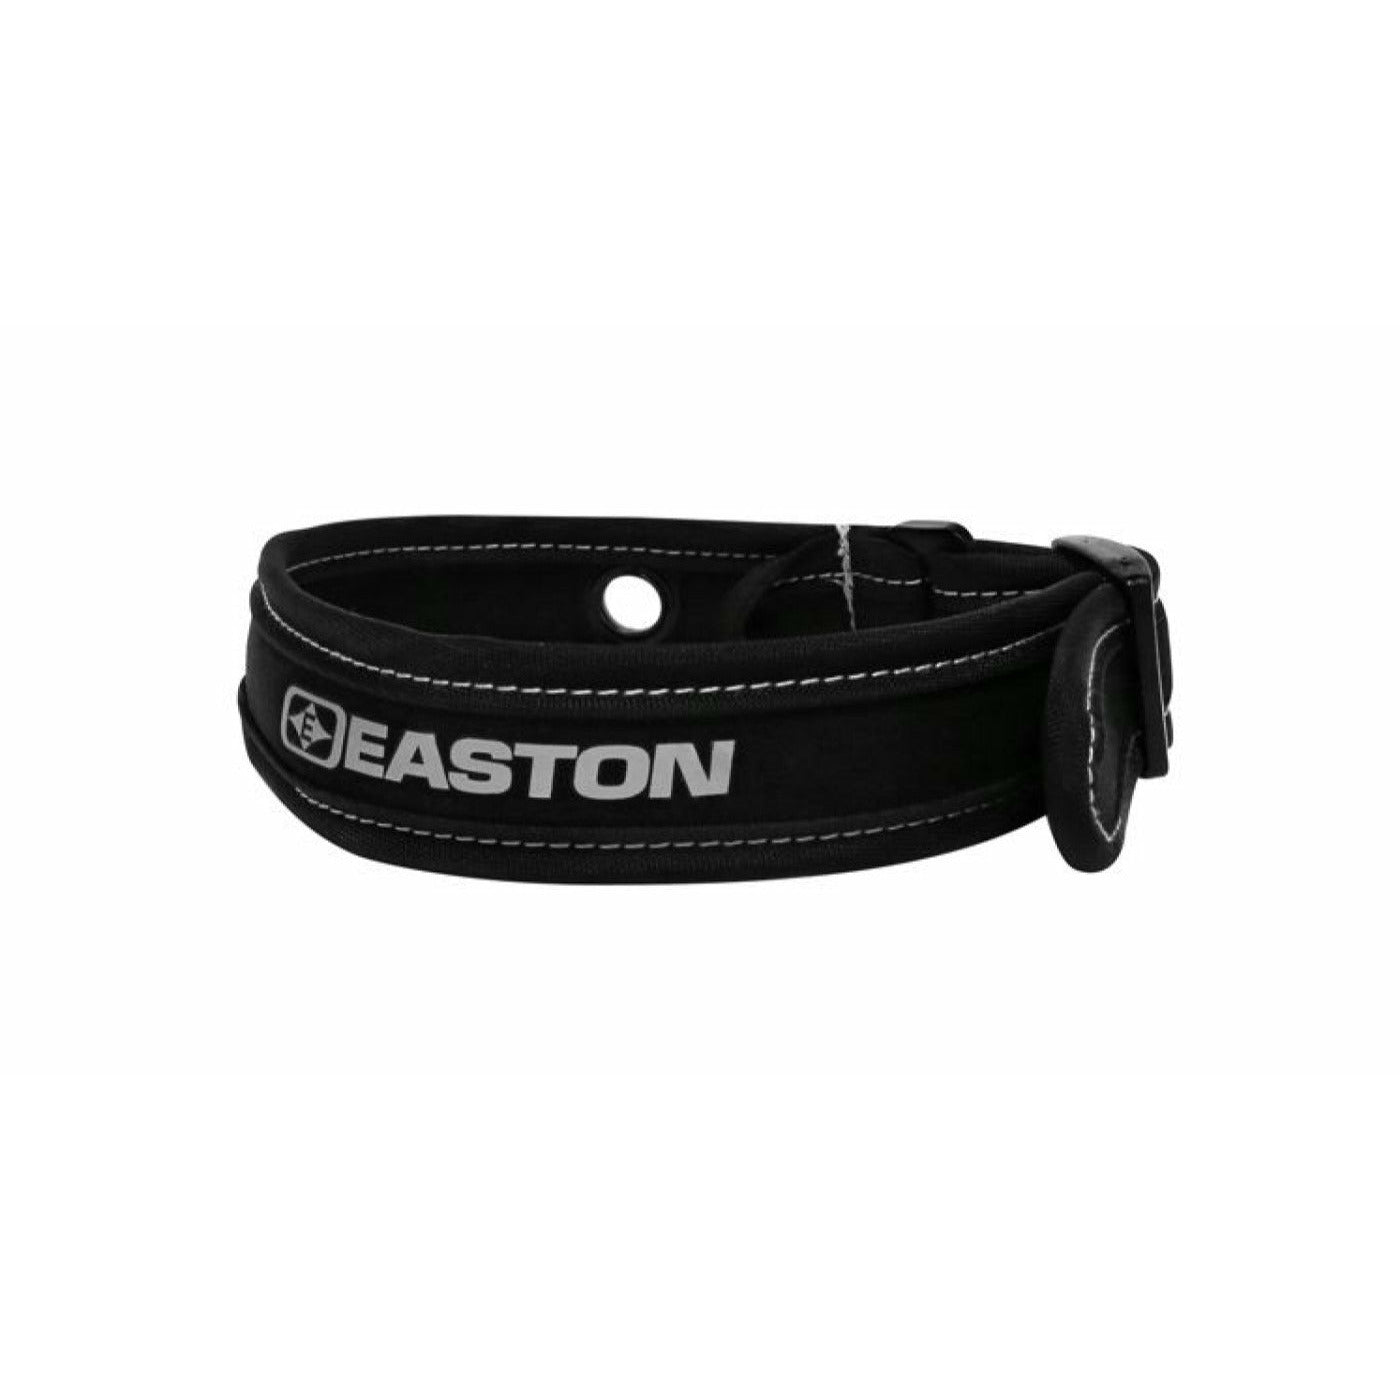 Easton Premium Wrist Sling